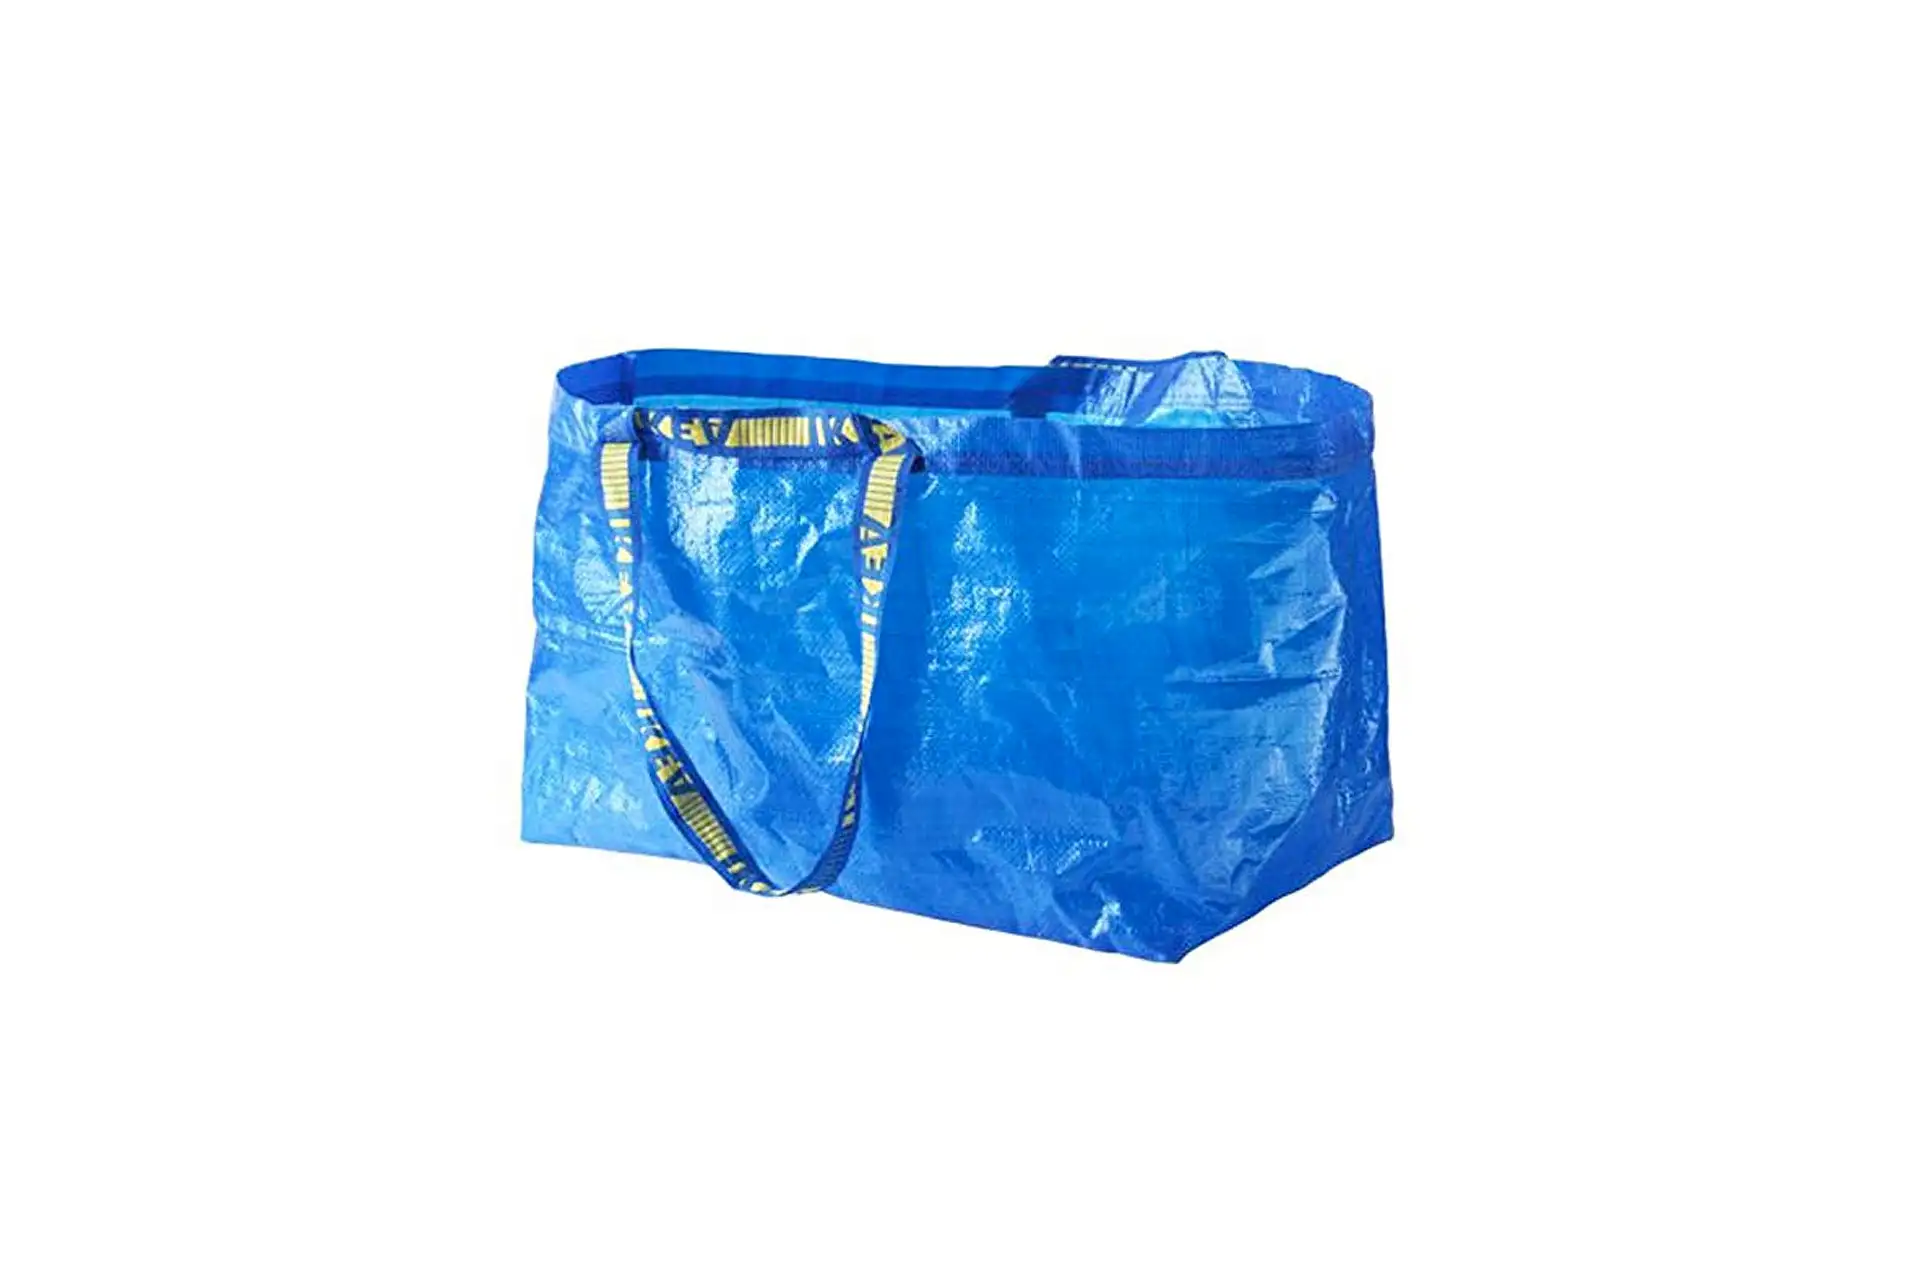 IKEA Bag; Courtesy of Amazon